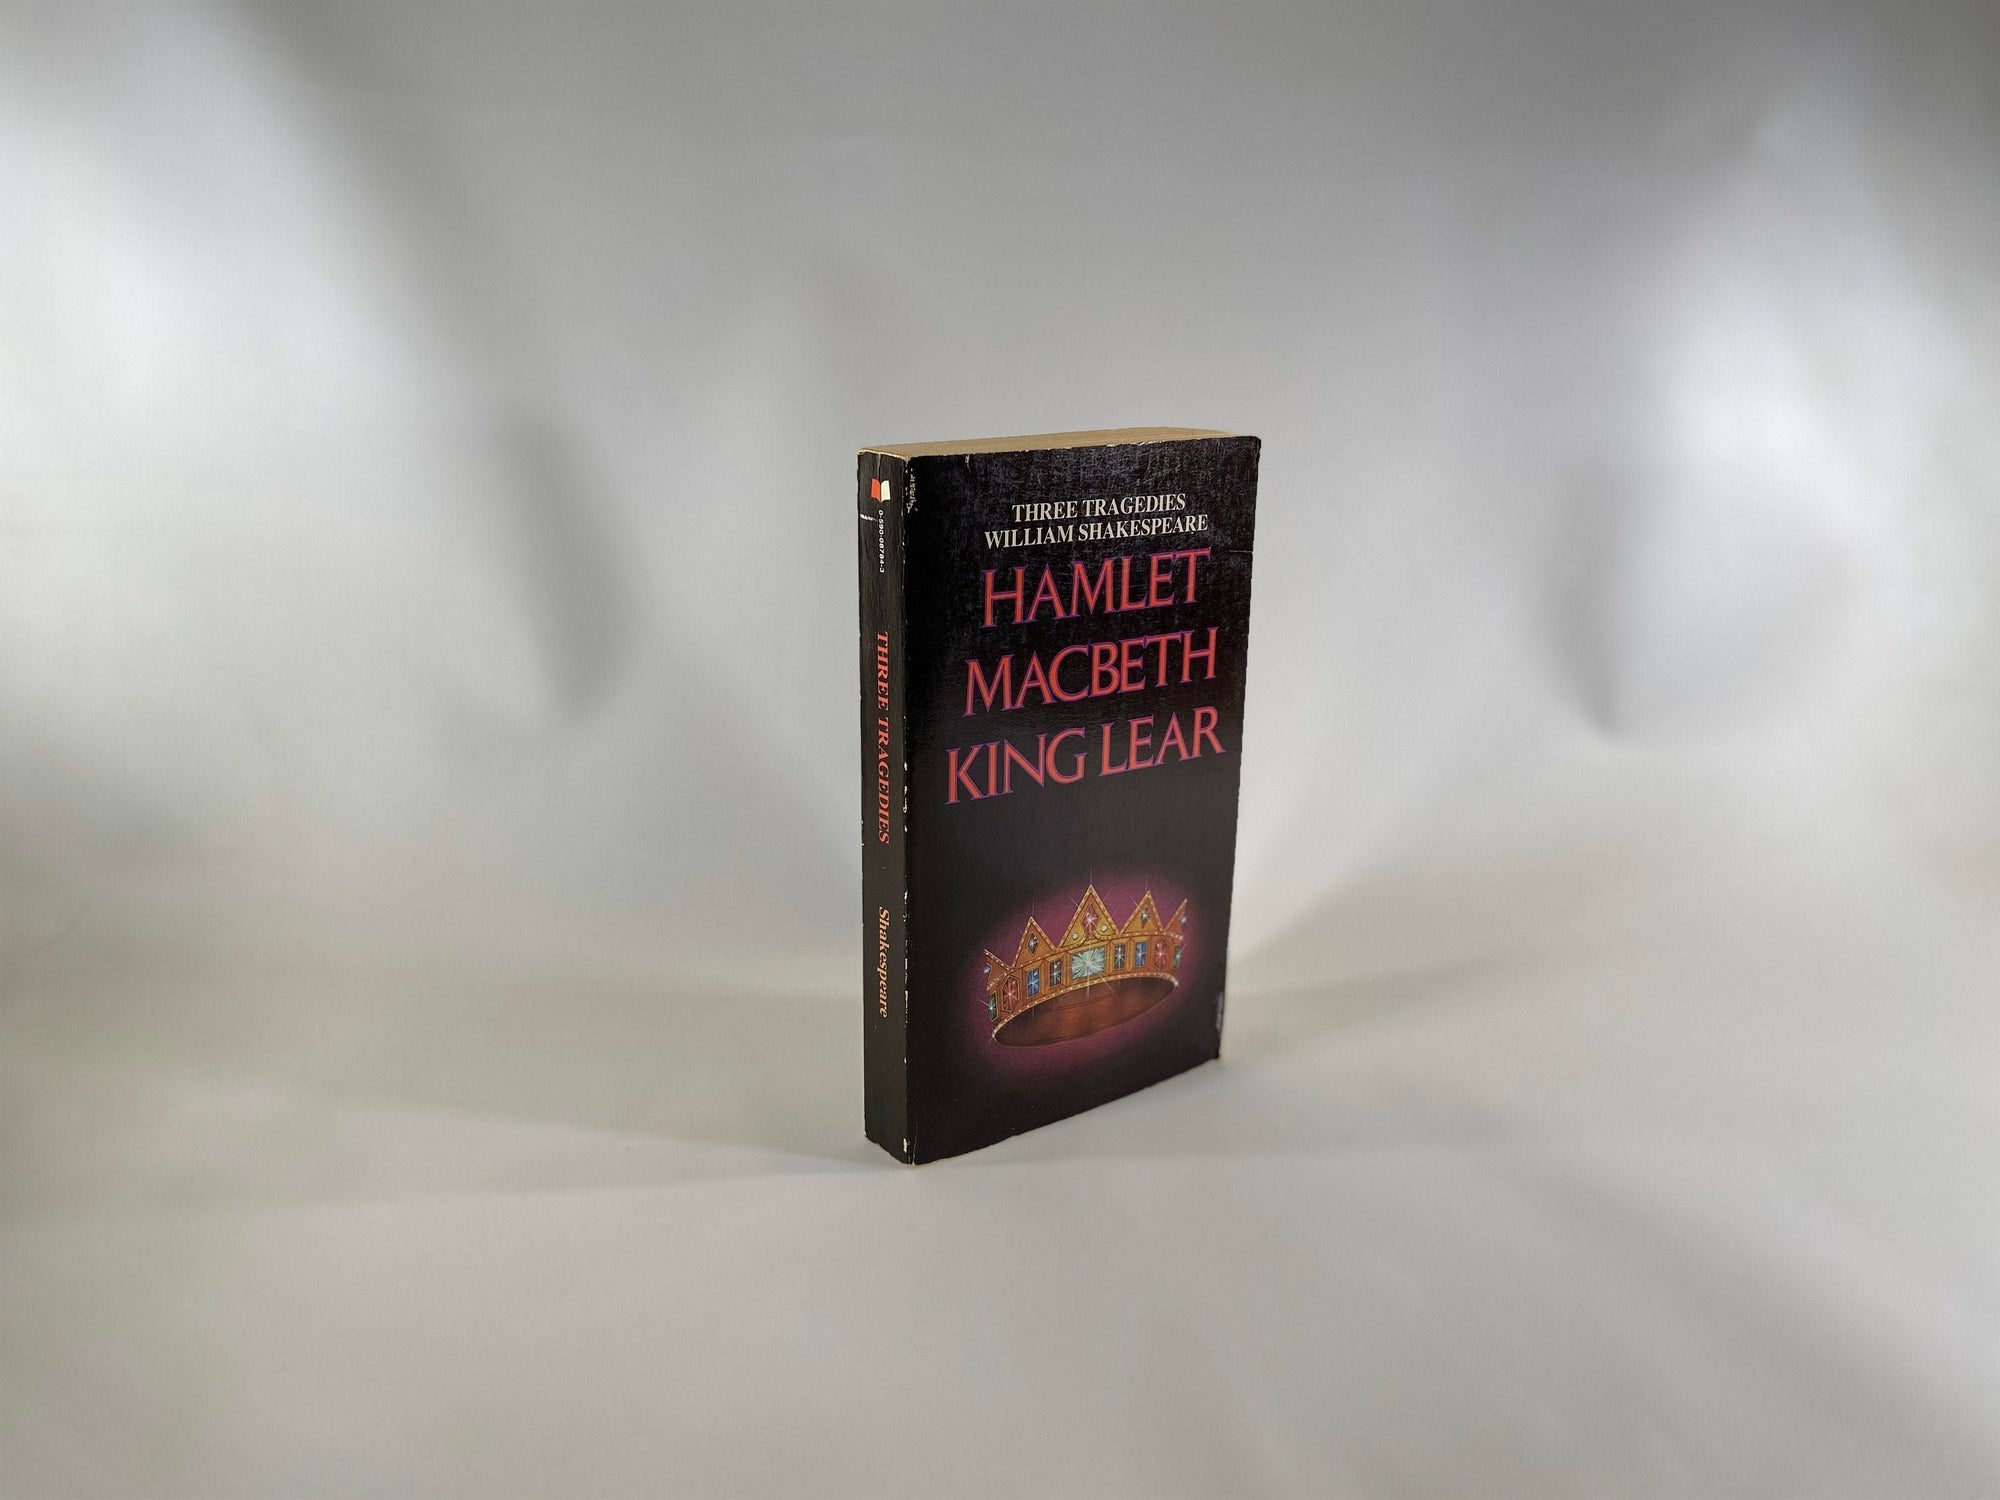 Three Tragedies William Shakespeare Hamlet Macbeth King Lear 1970 Vintage Book